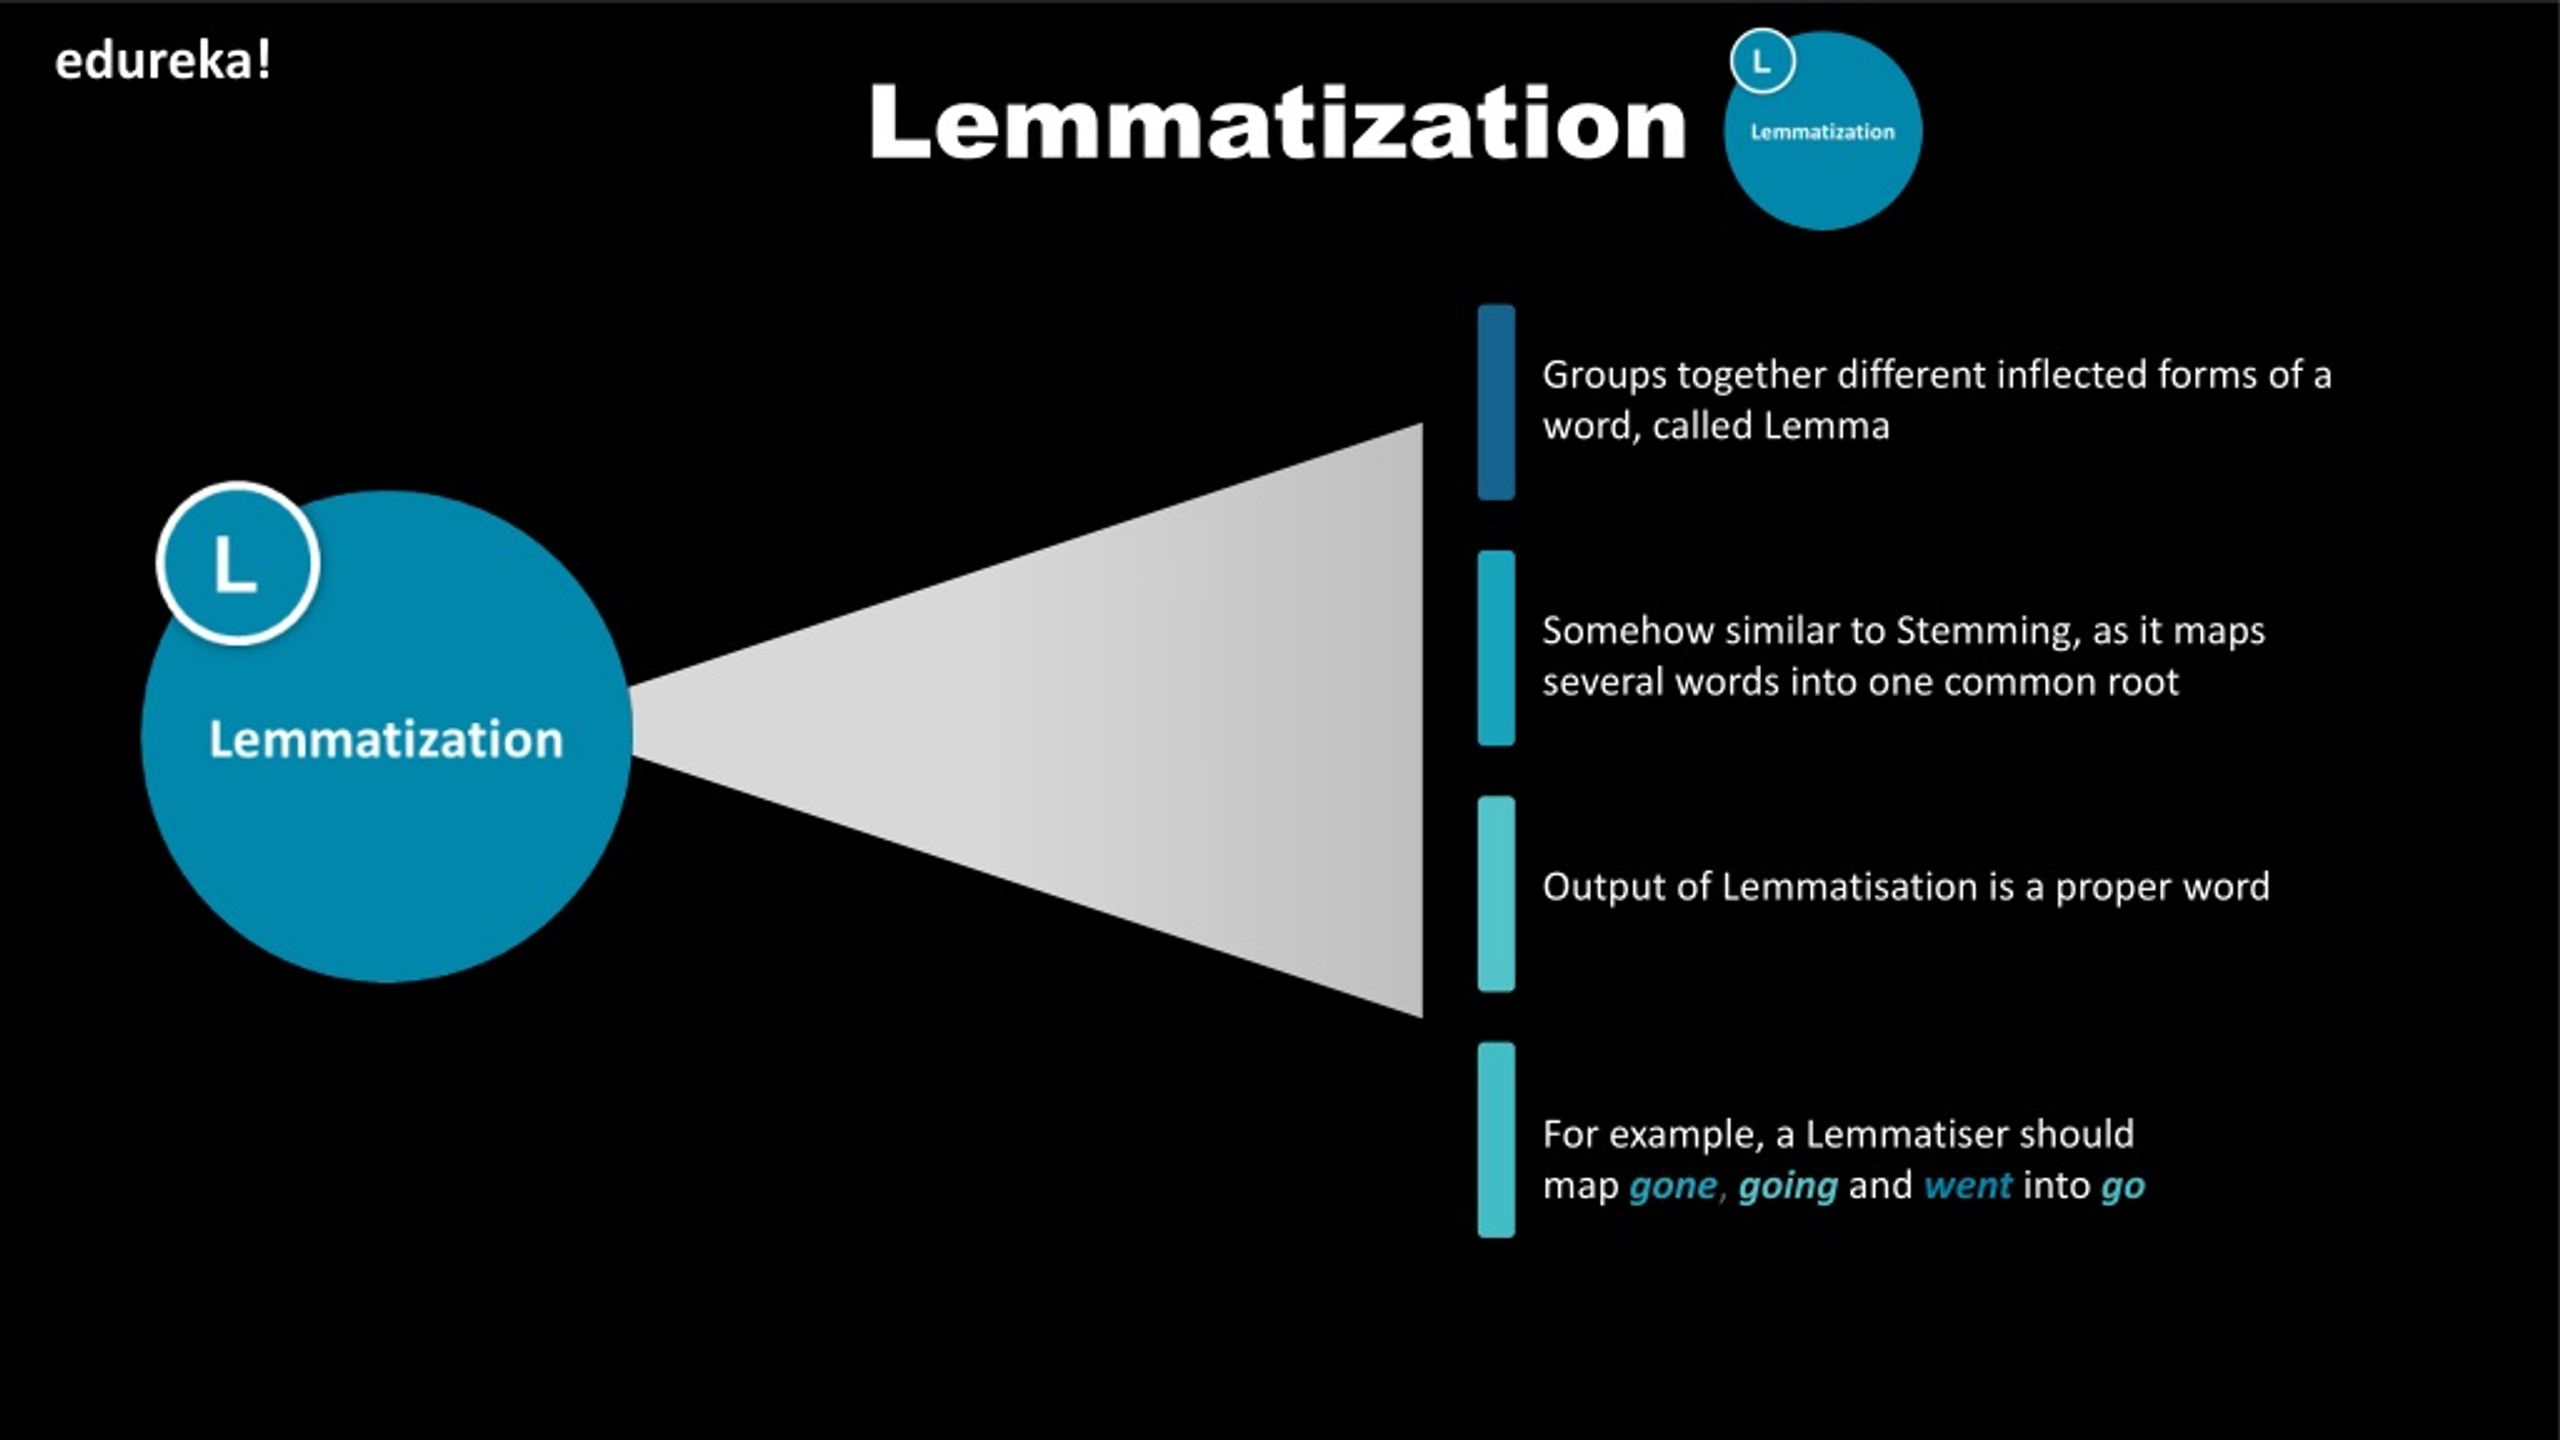 What is Lemmatization